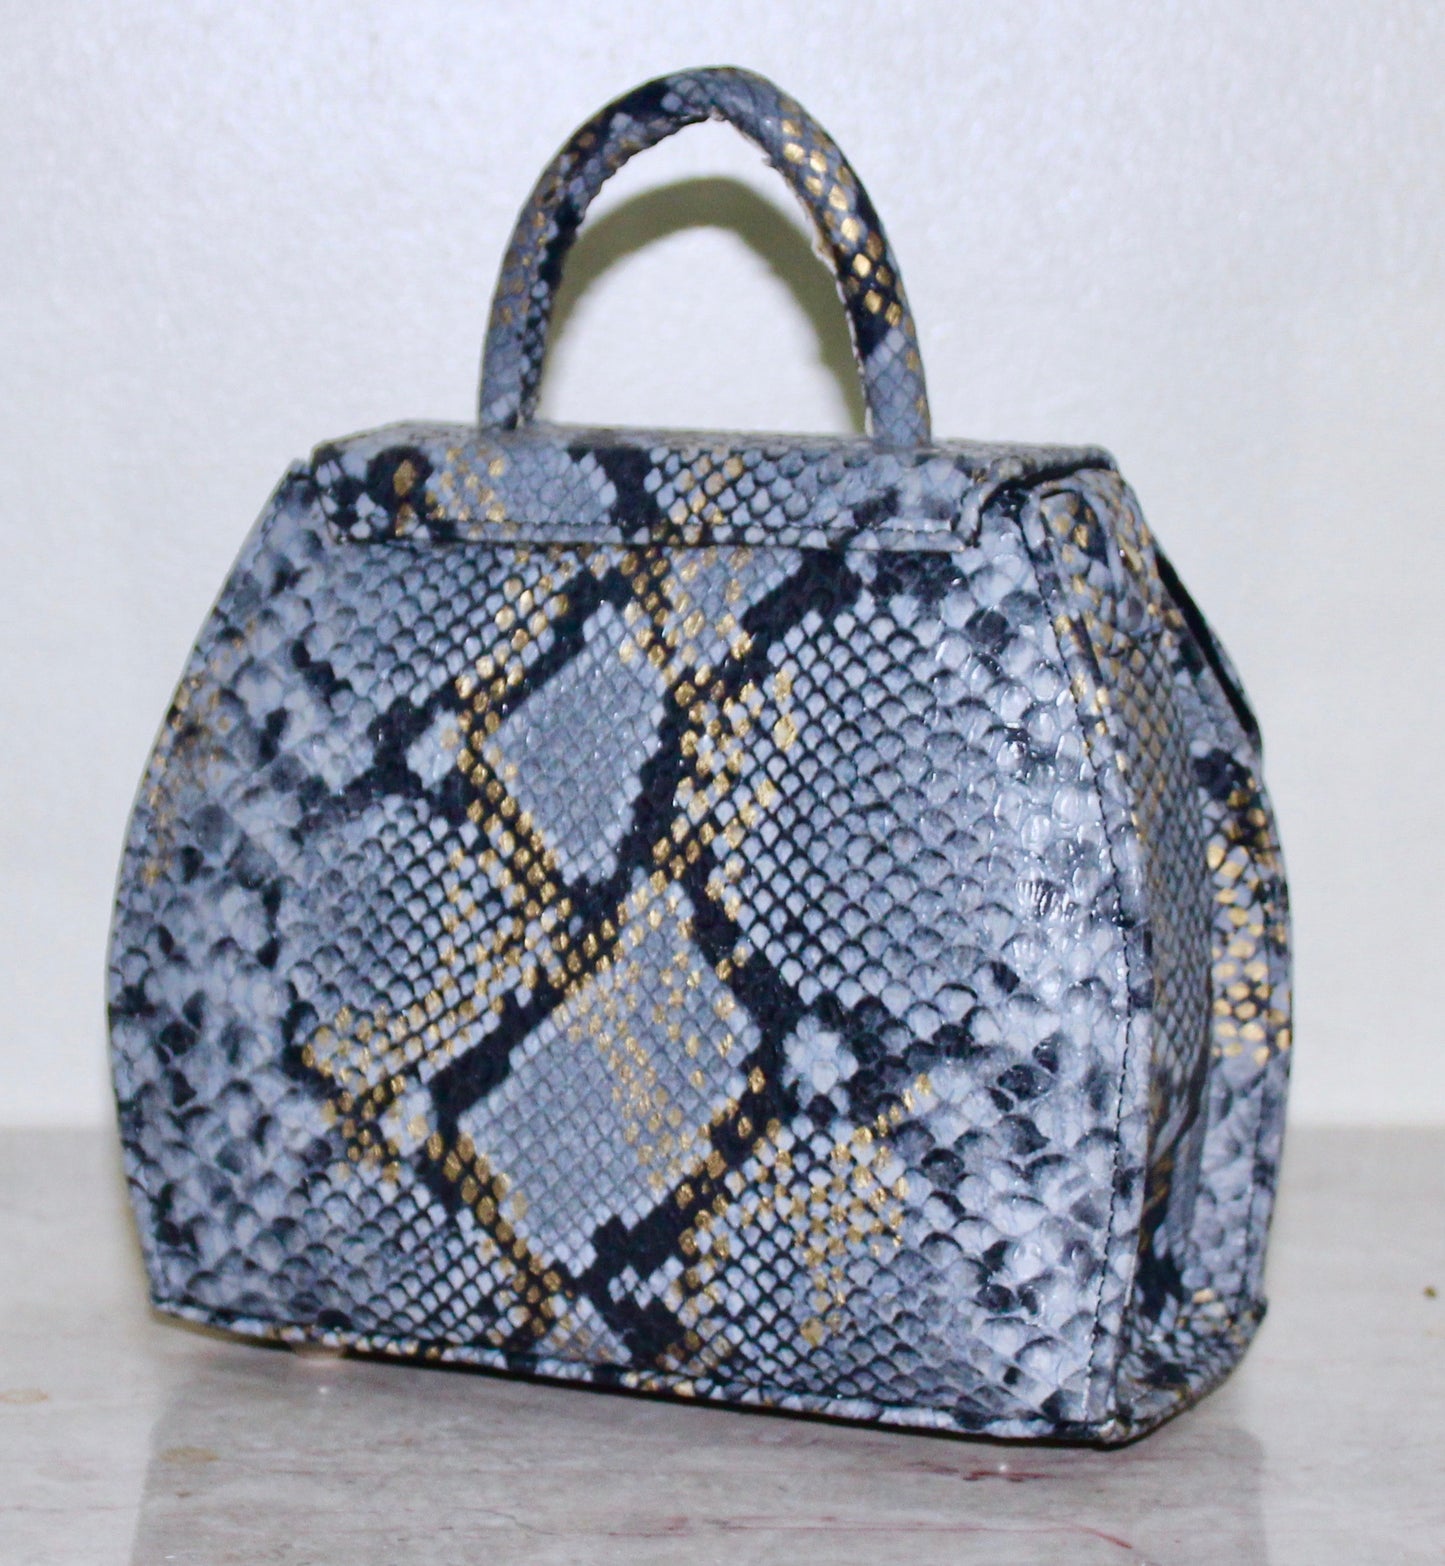 The Giza Mini Handbag - Nubian Goods